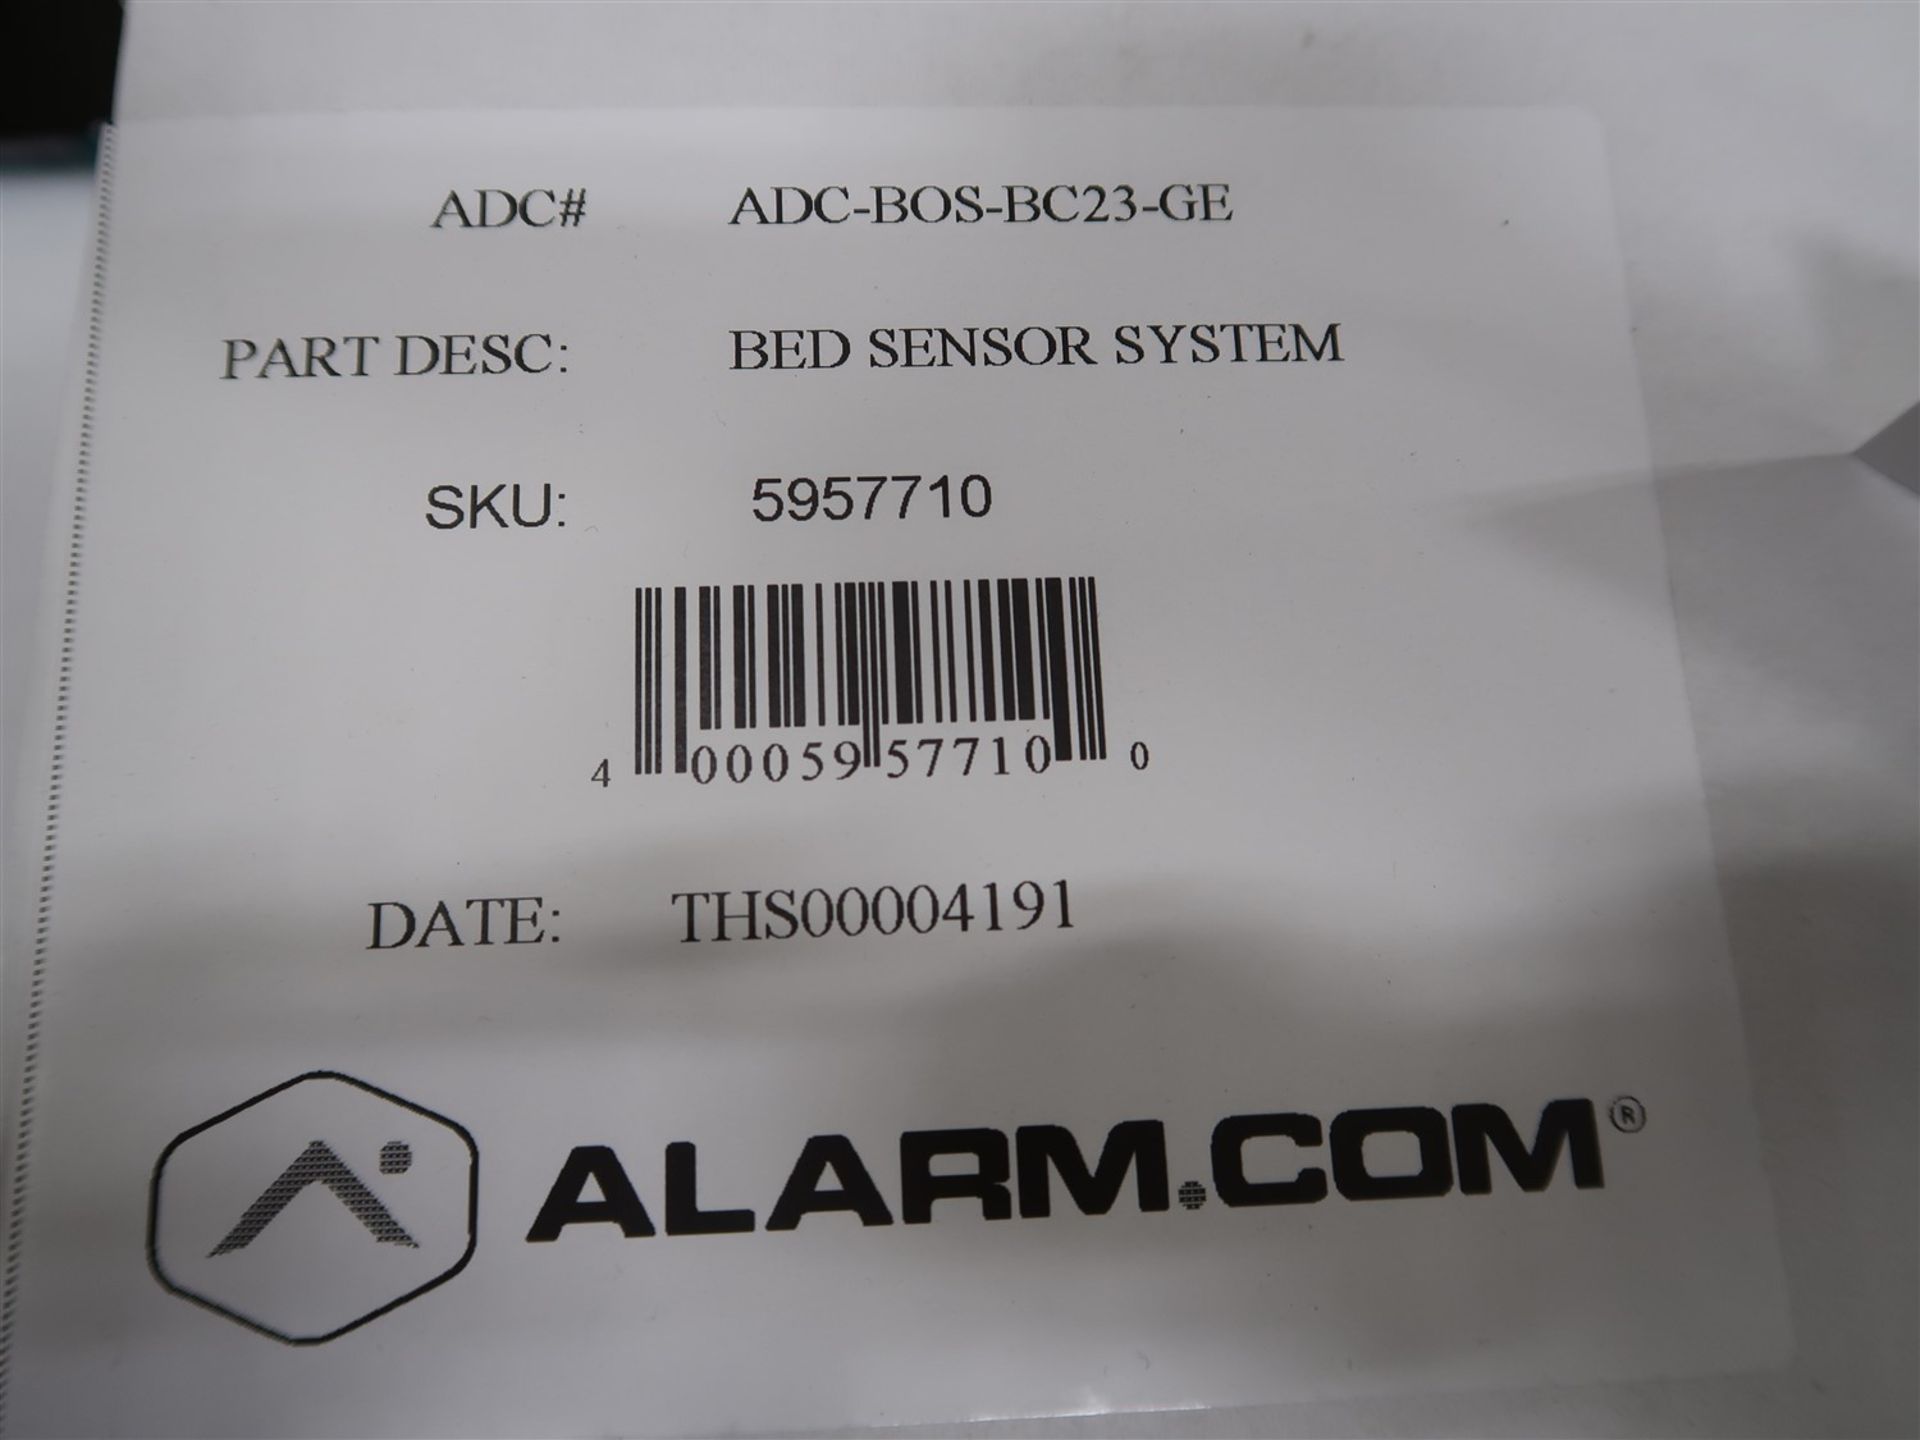 ALARM.COM ADAPTIVE BED SENSOR SYSTEM PART #ADC-BOS-BC23-GE (BNIB) - Image 2 of 2